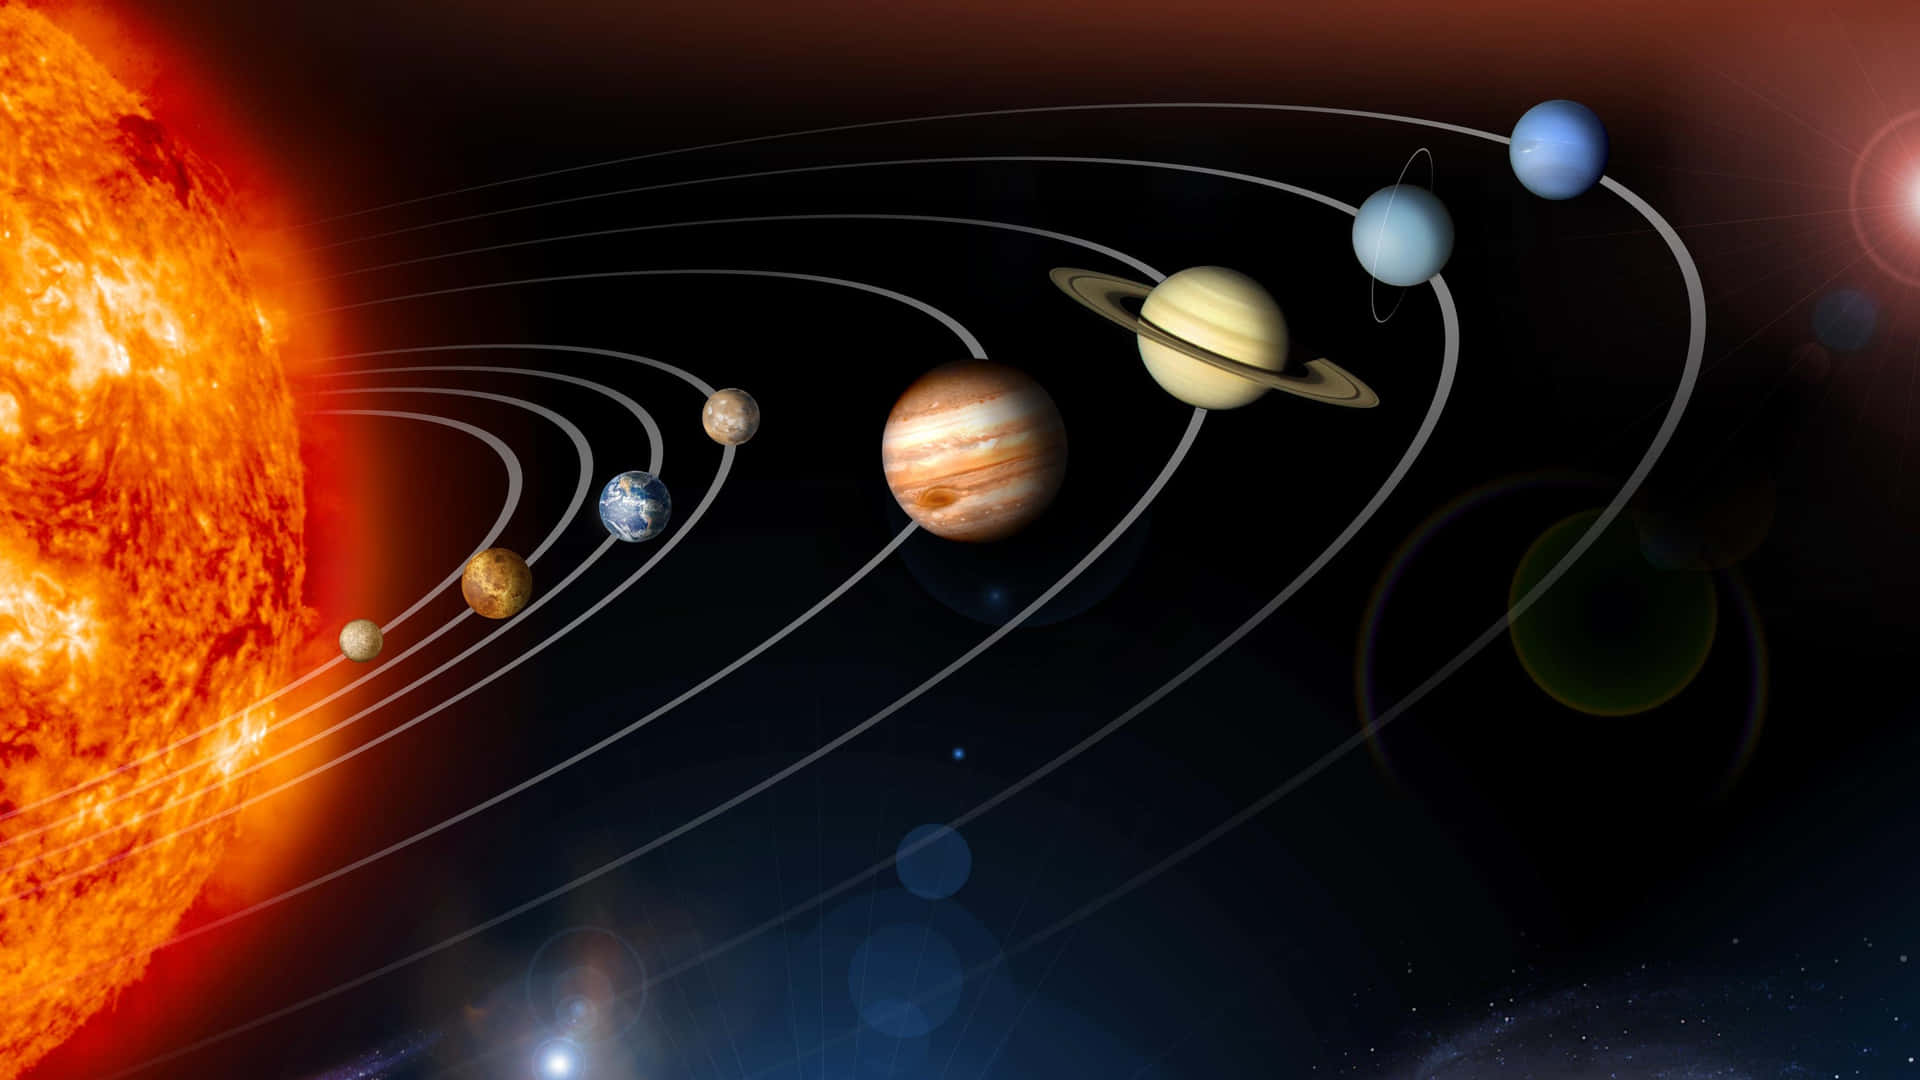 Imagemdo Sol E Dos Planetas No Sistema Solar.